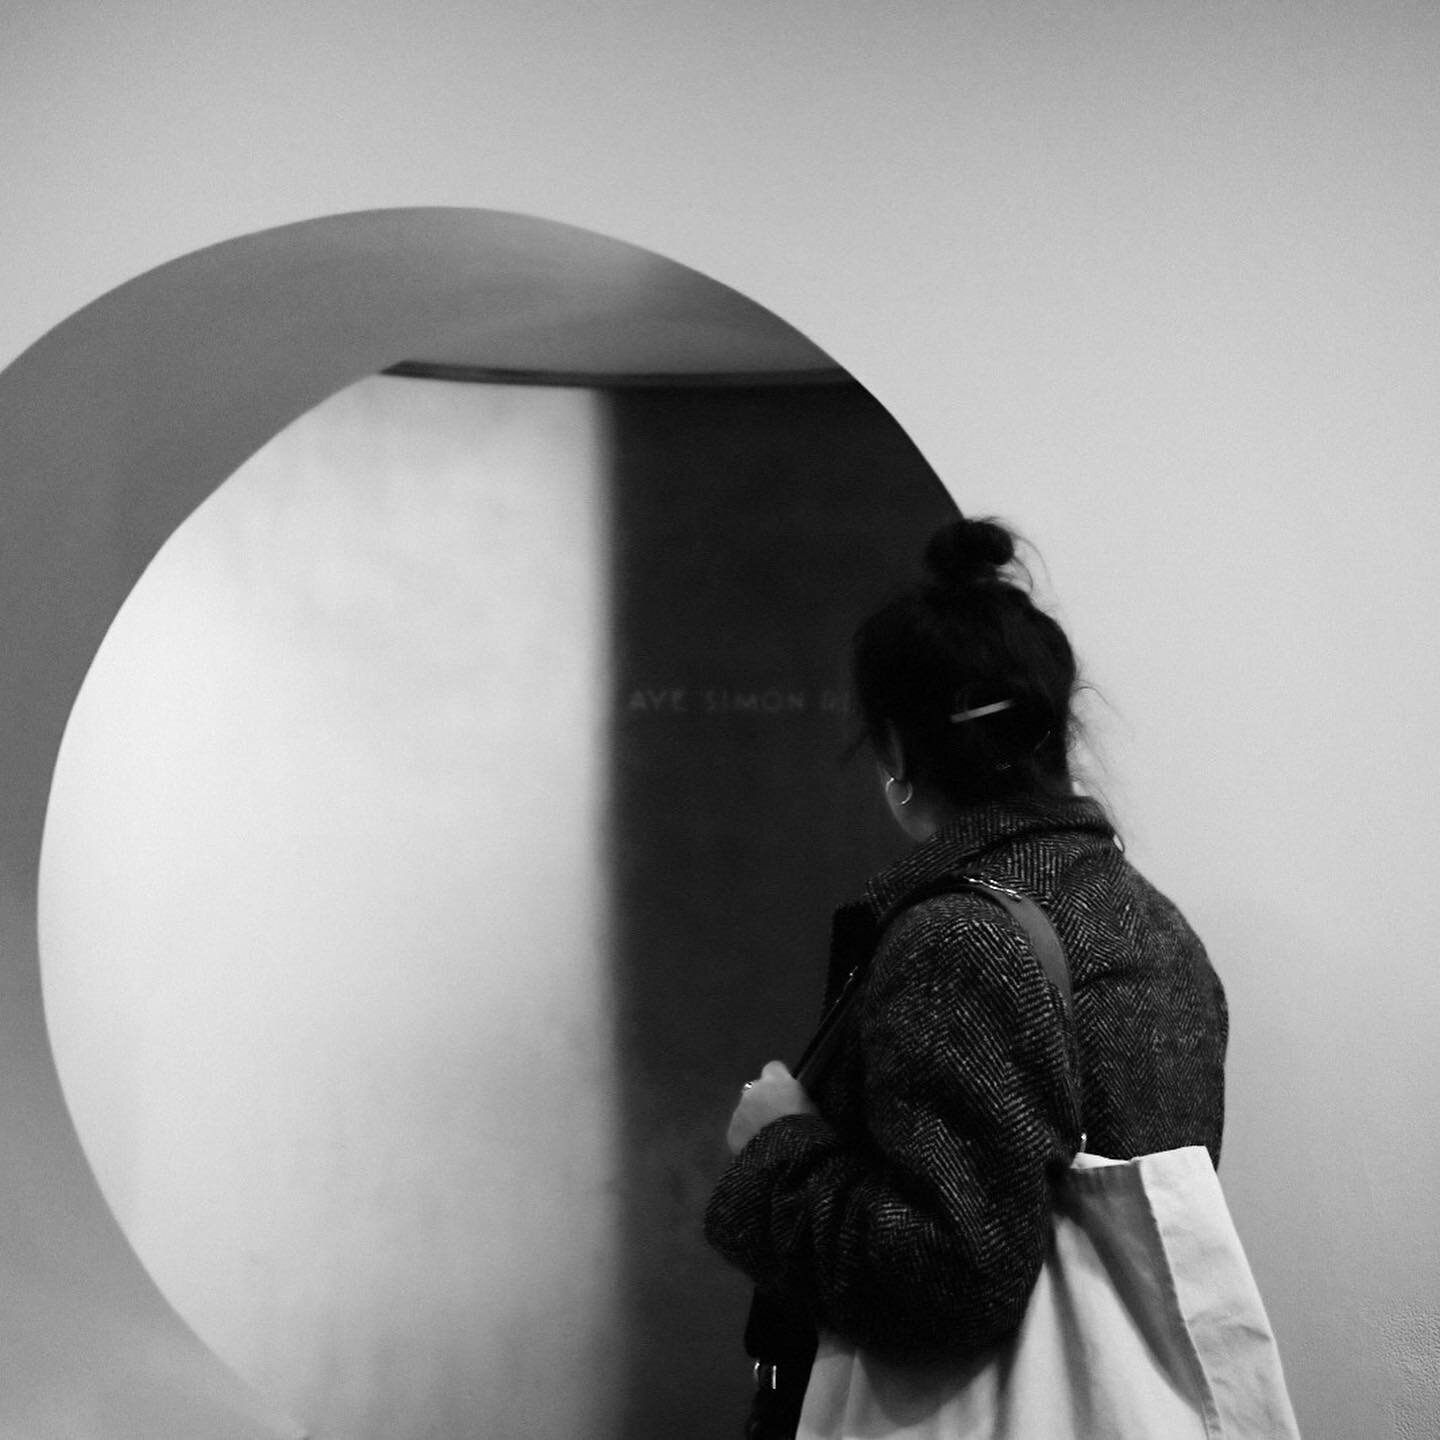 Inside the Gugg  #quericohdani #ricohgr #ricoh #photography #nyt #nyc #museum #guggenheim @dcalderon.photo @ricoh_gr_official @ricohusa